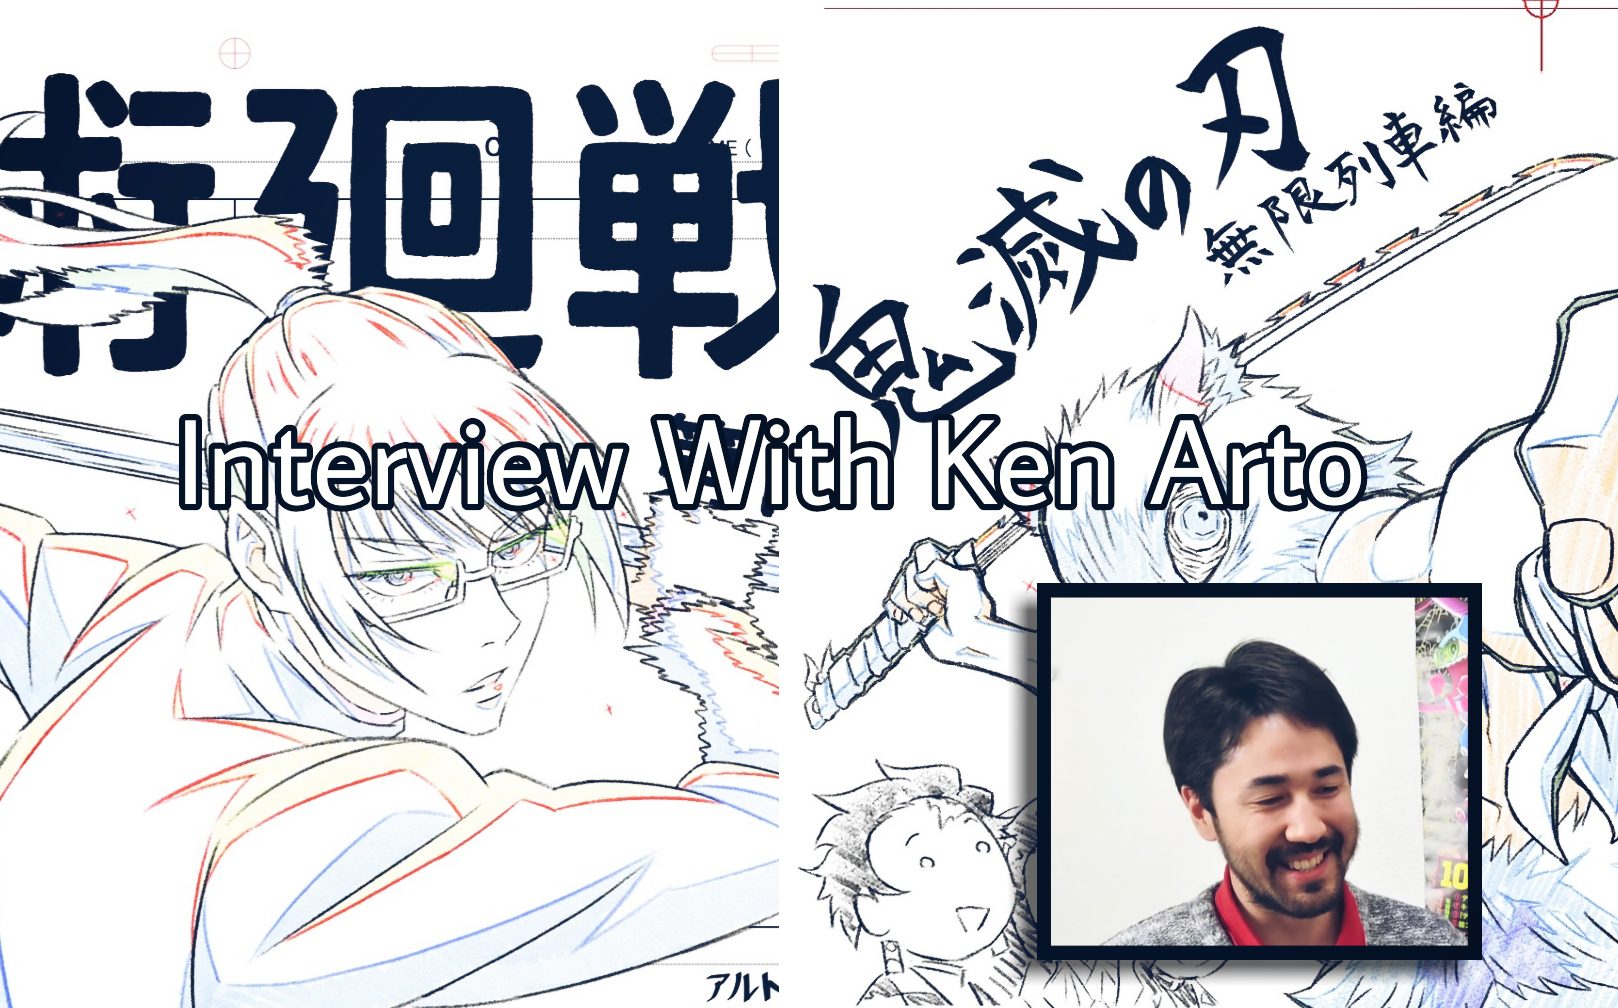 An interview with Ken Arto